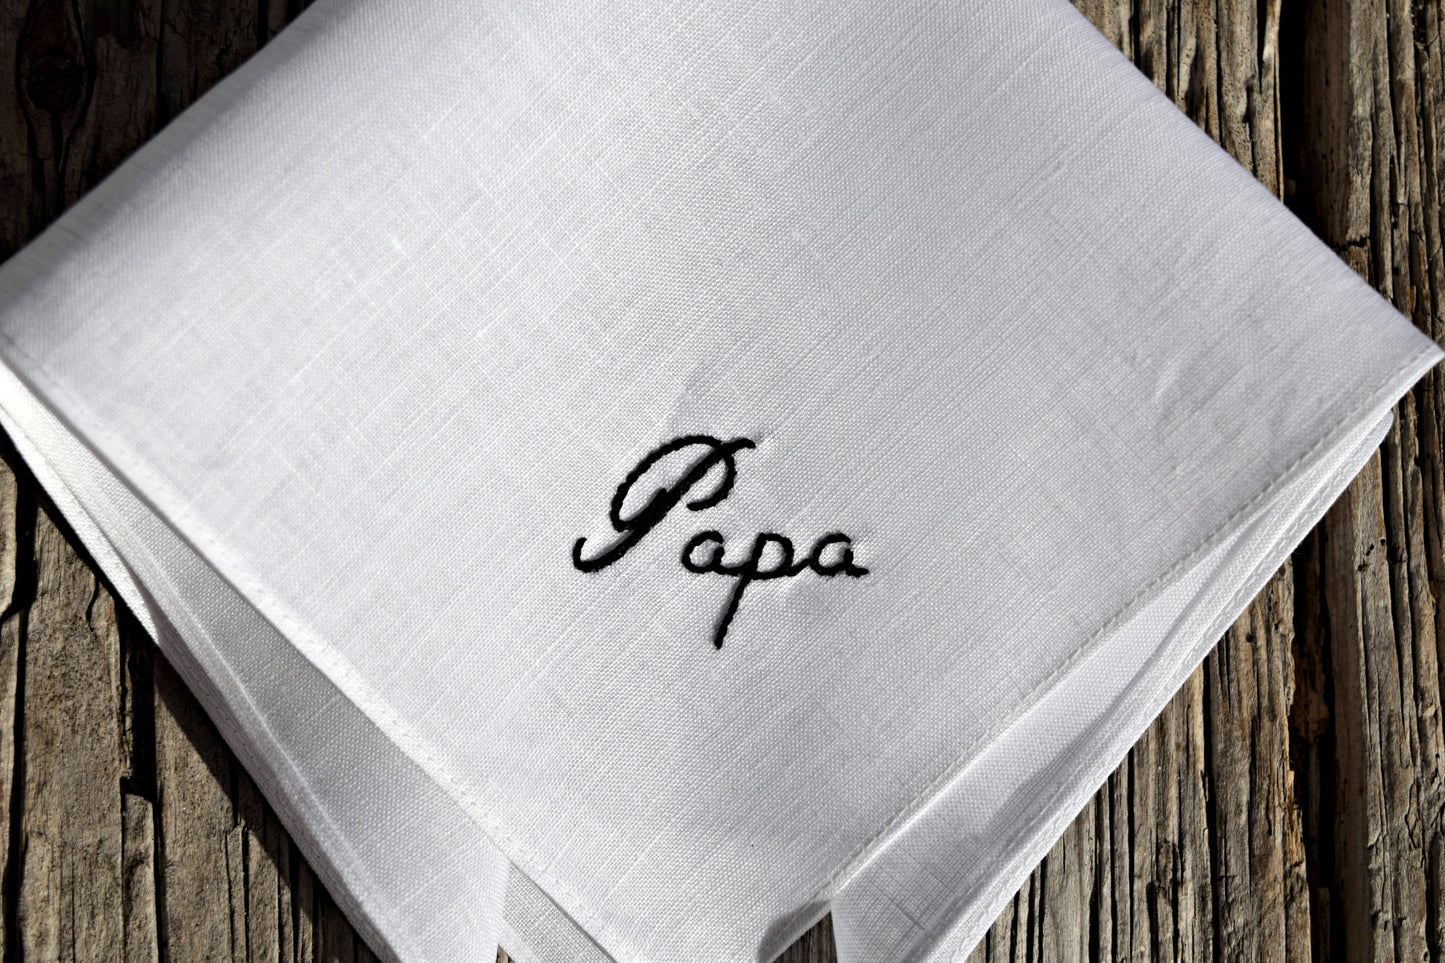 Irish linen handkerchief with the name 'Papa' in black